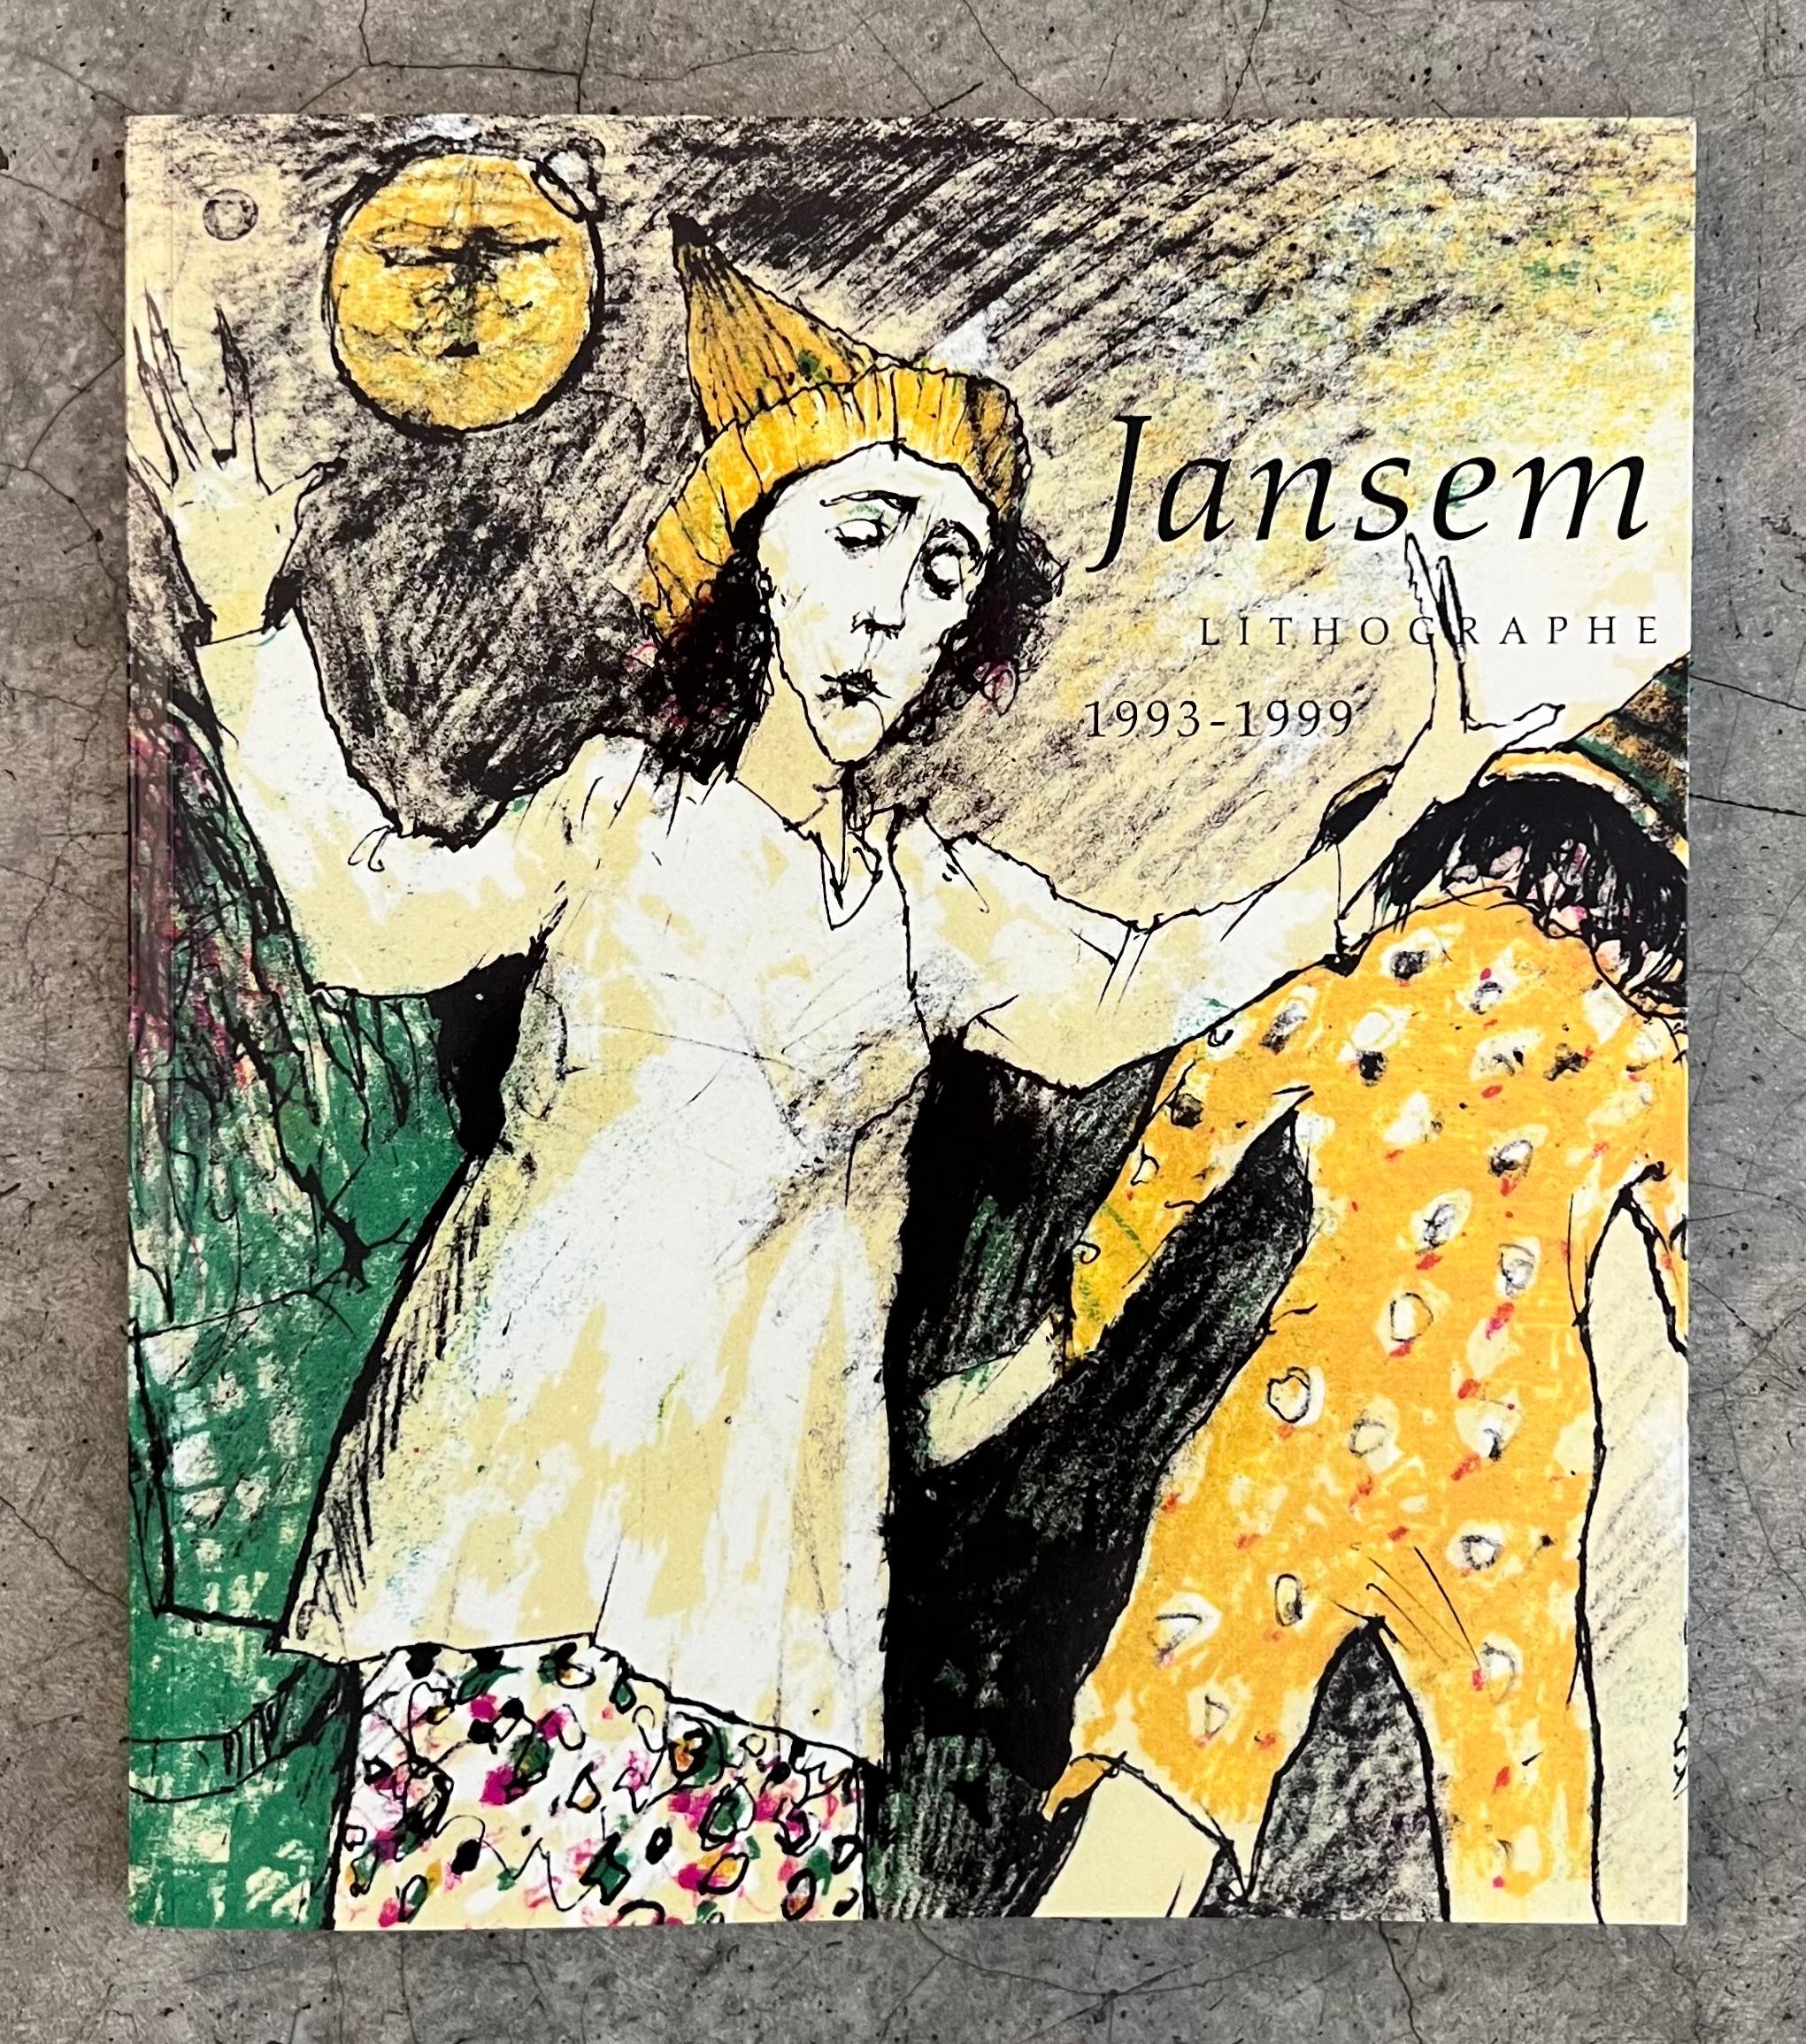 Joelle au coussin rose, 1995, original lithograph by Jean Jansem handsigned 5